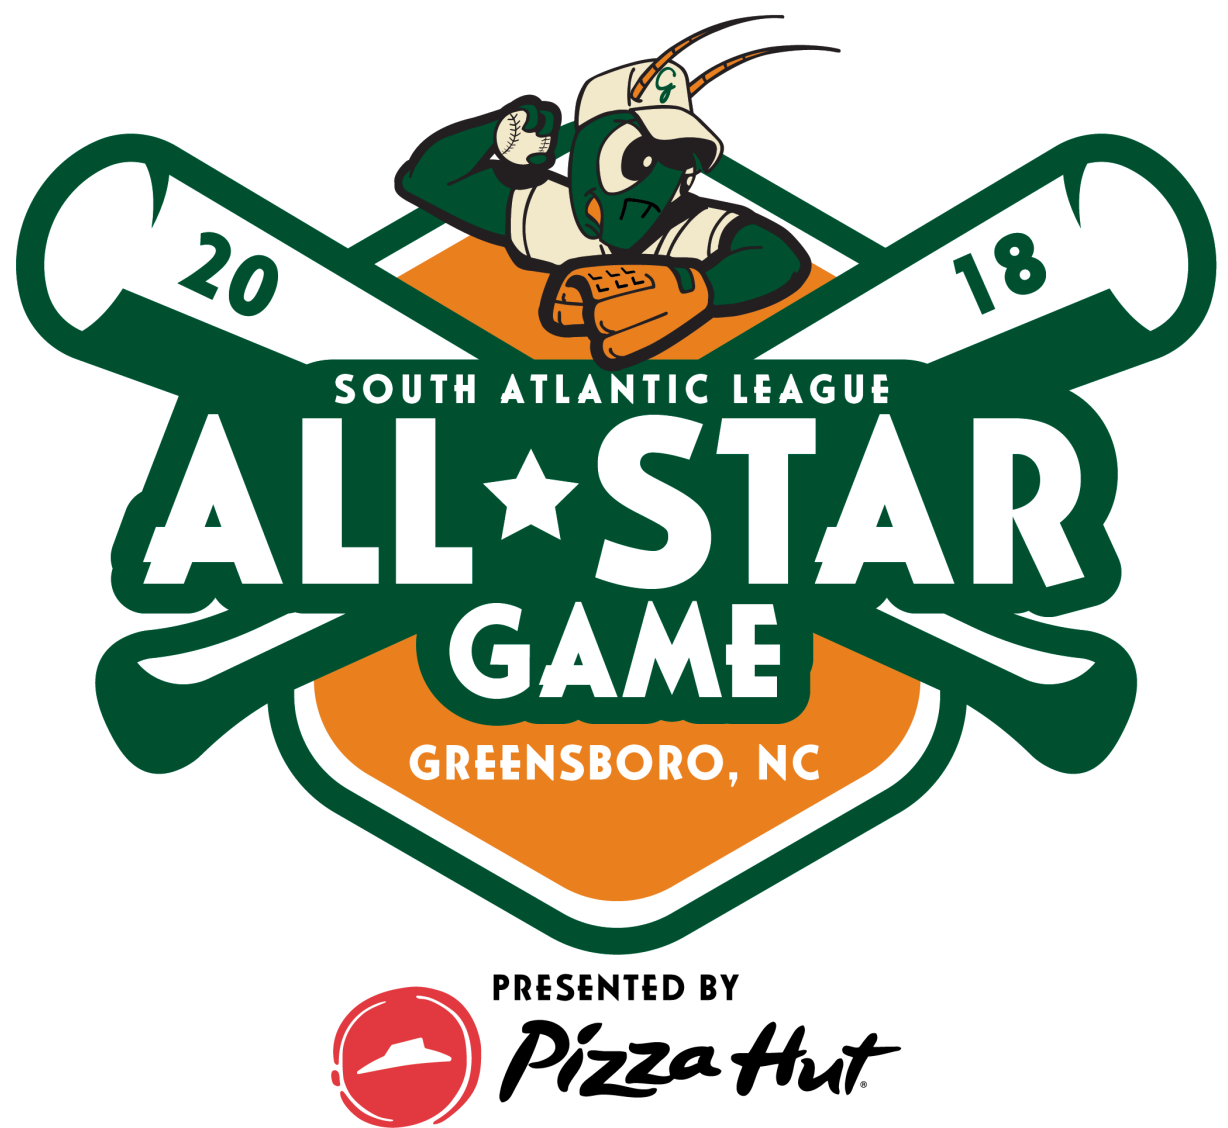 South Atlantic League All-star Game Logo - All-star Game (1619x1279)